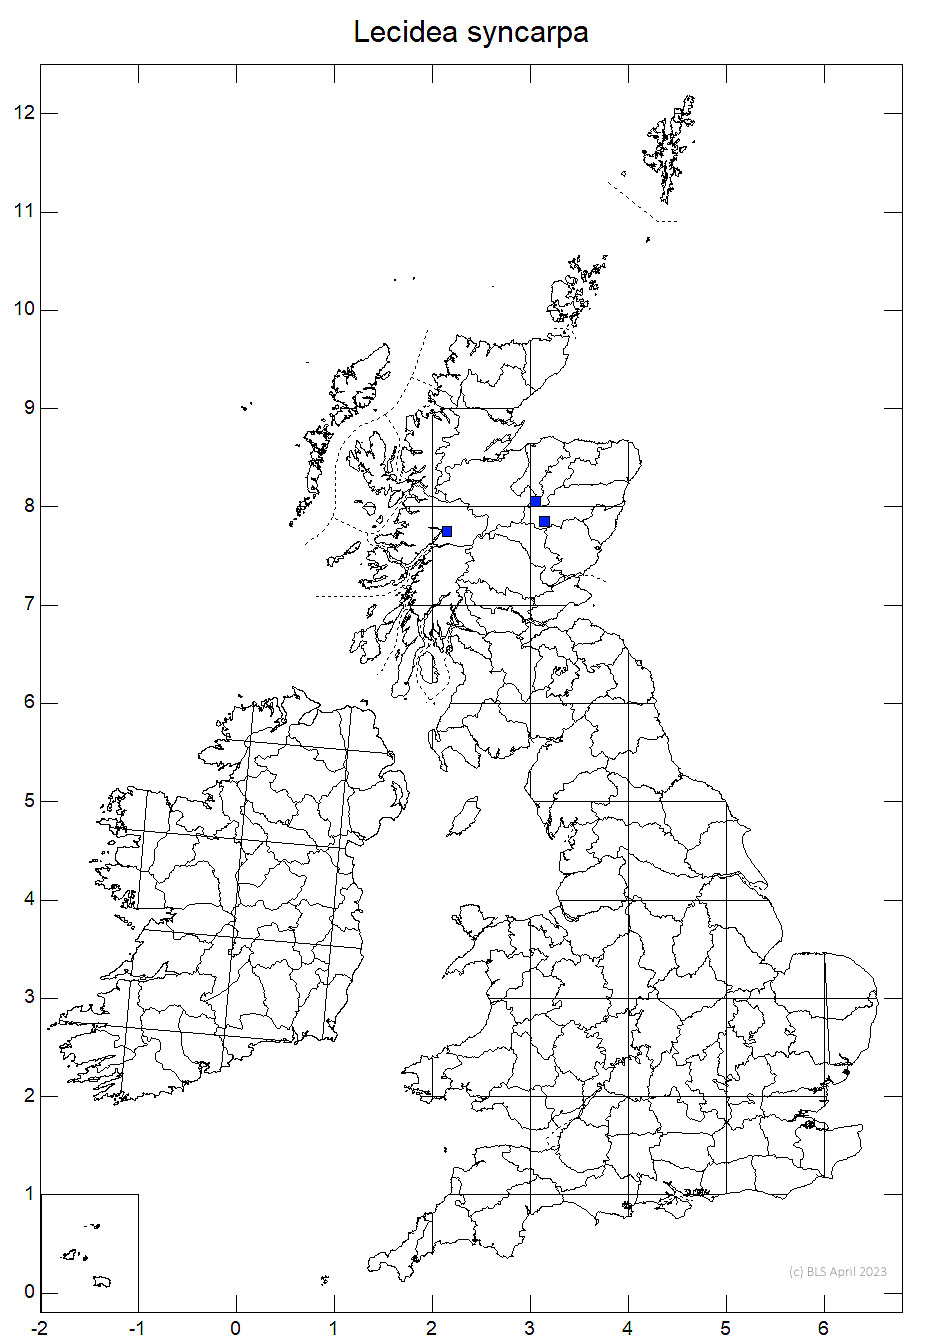 Lecidea syncarpa 10km sq distribution map